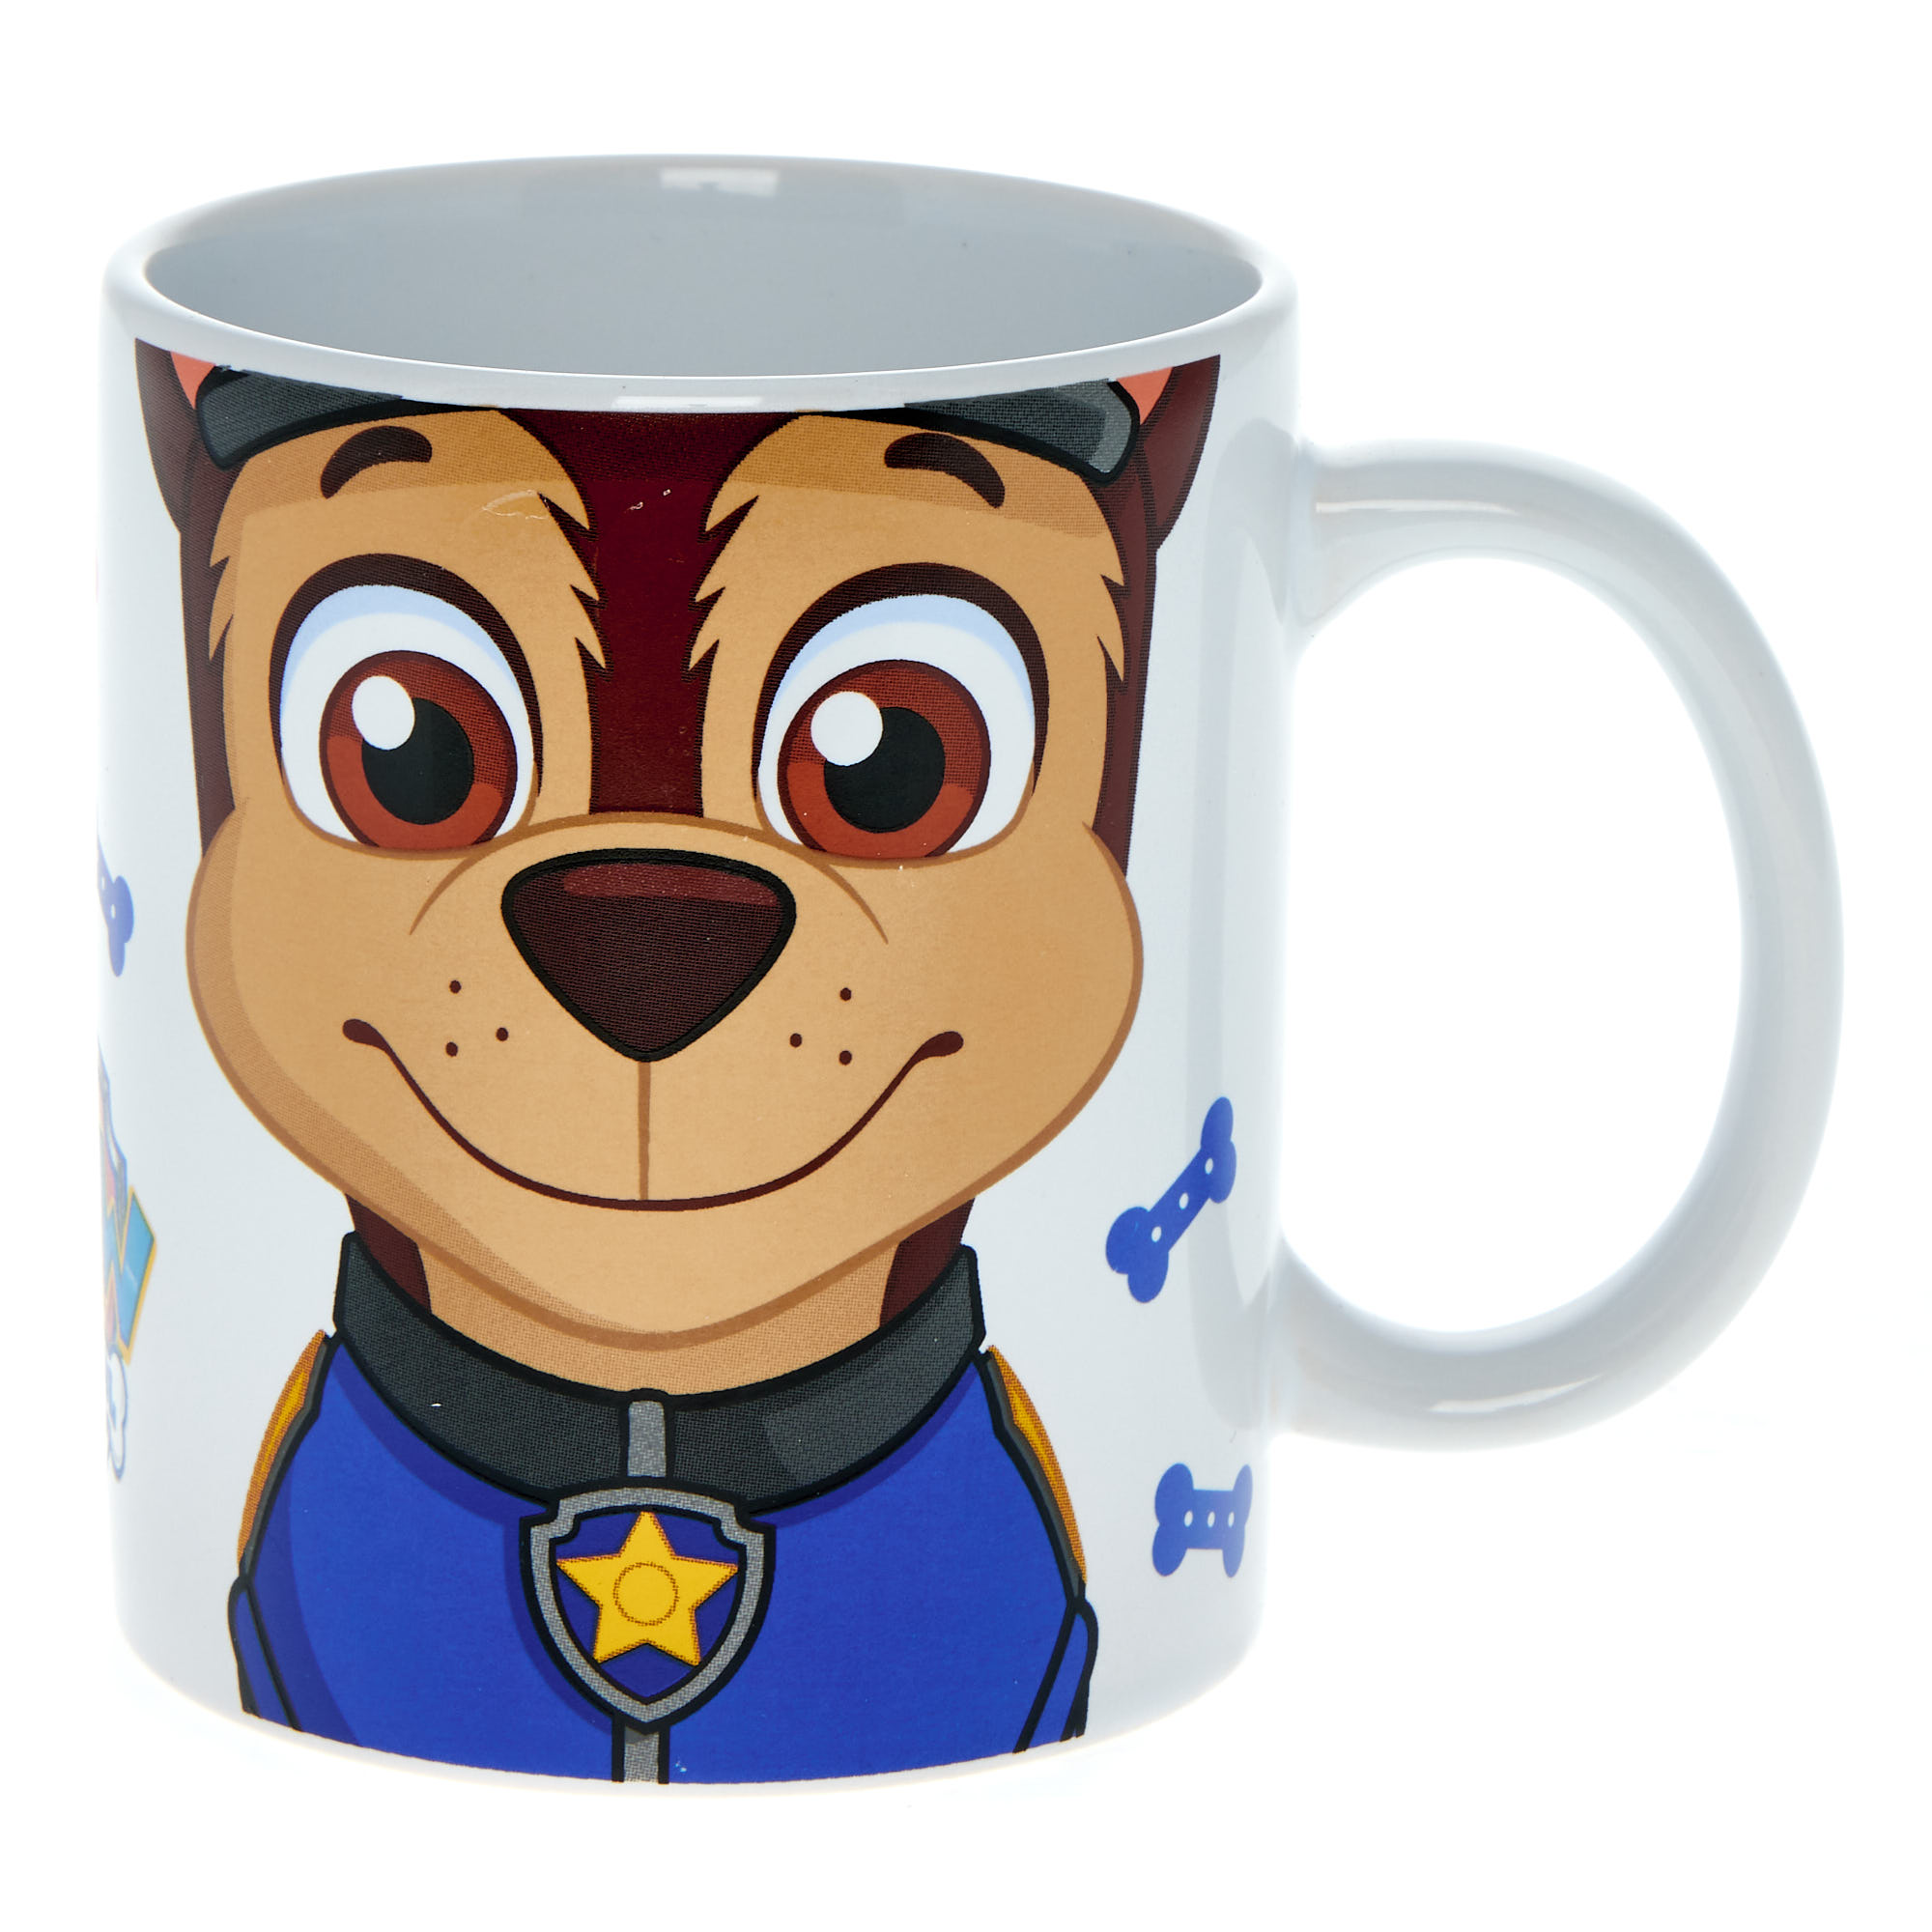 Blue Paw Patrol Mug & Hot Chocolate Drink Mix